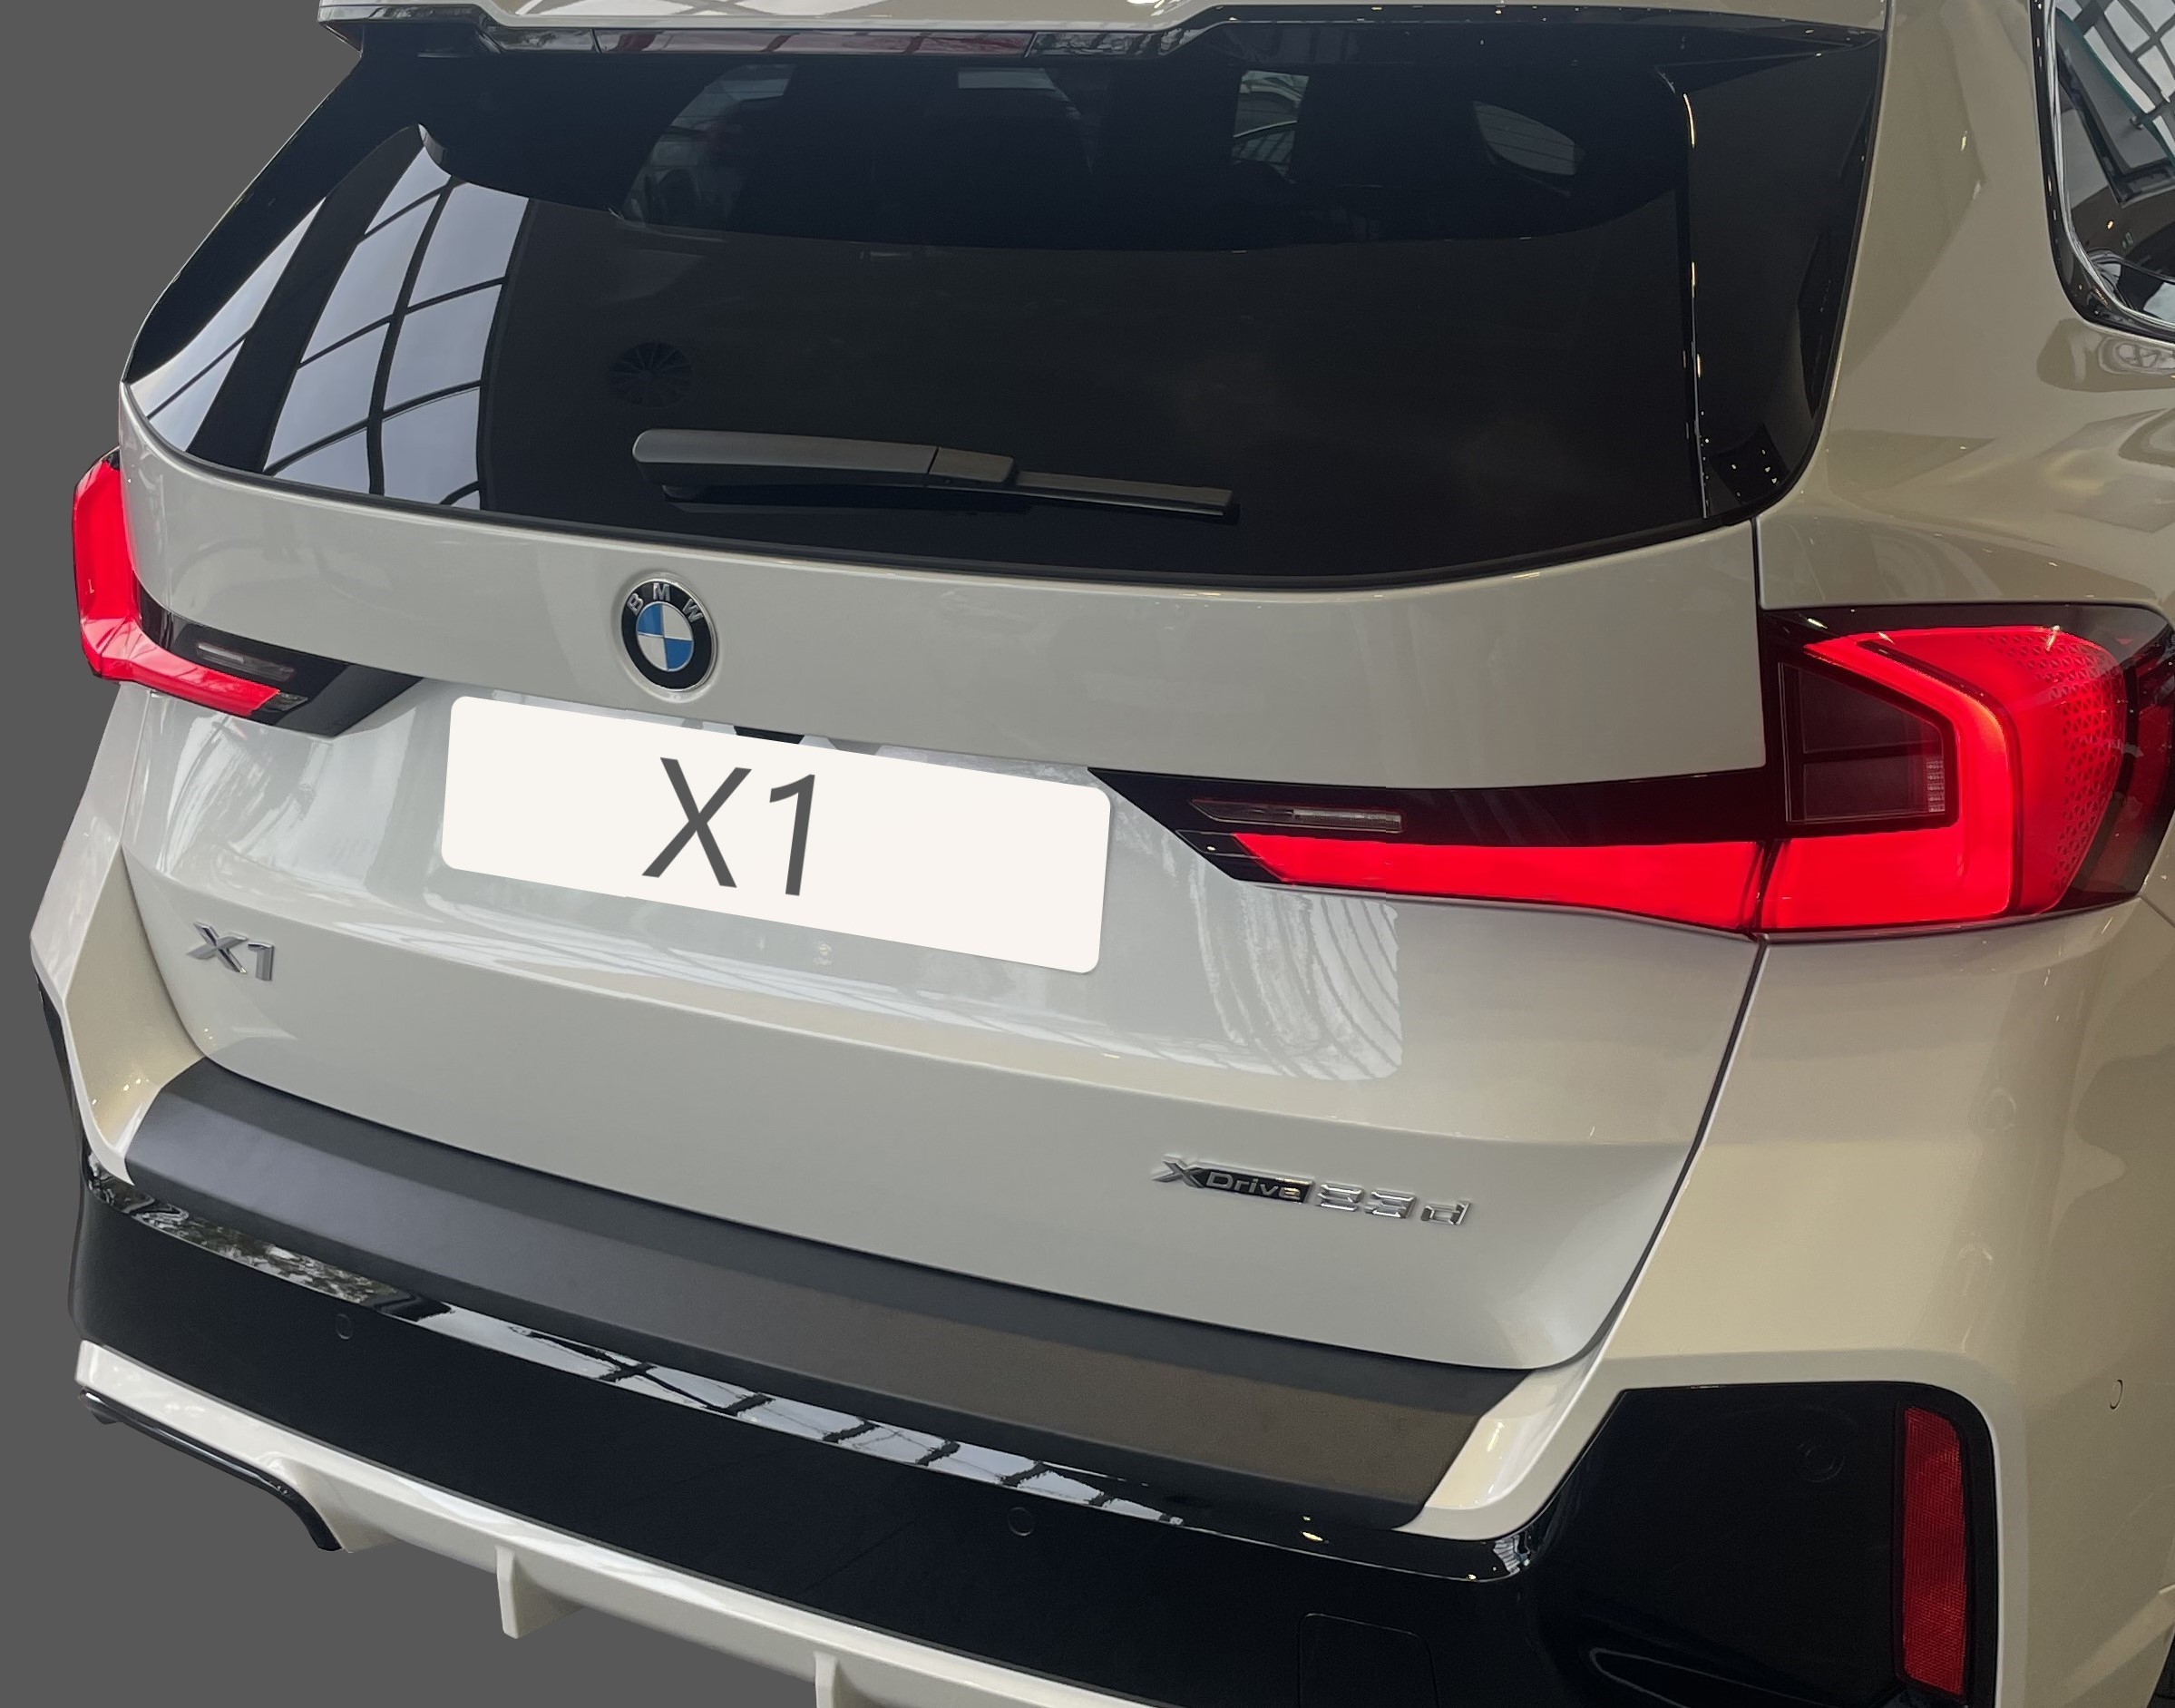 LADEKANTENSCHUTZ BMW X1 (U11) M-Paket 10.2022